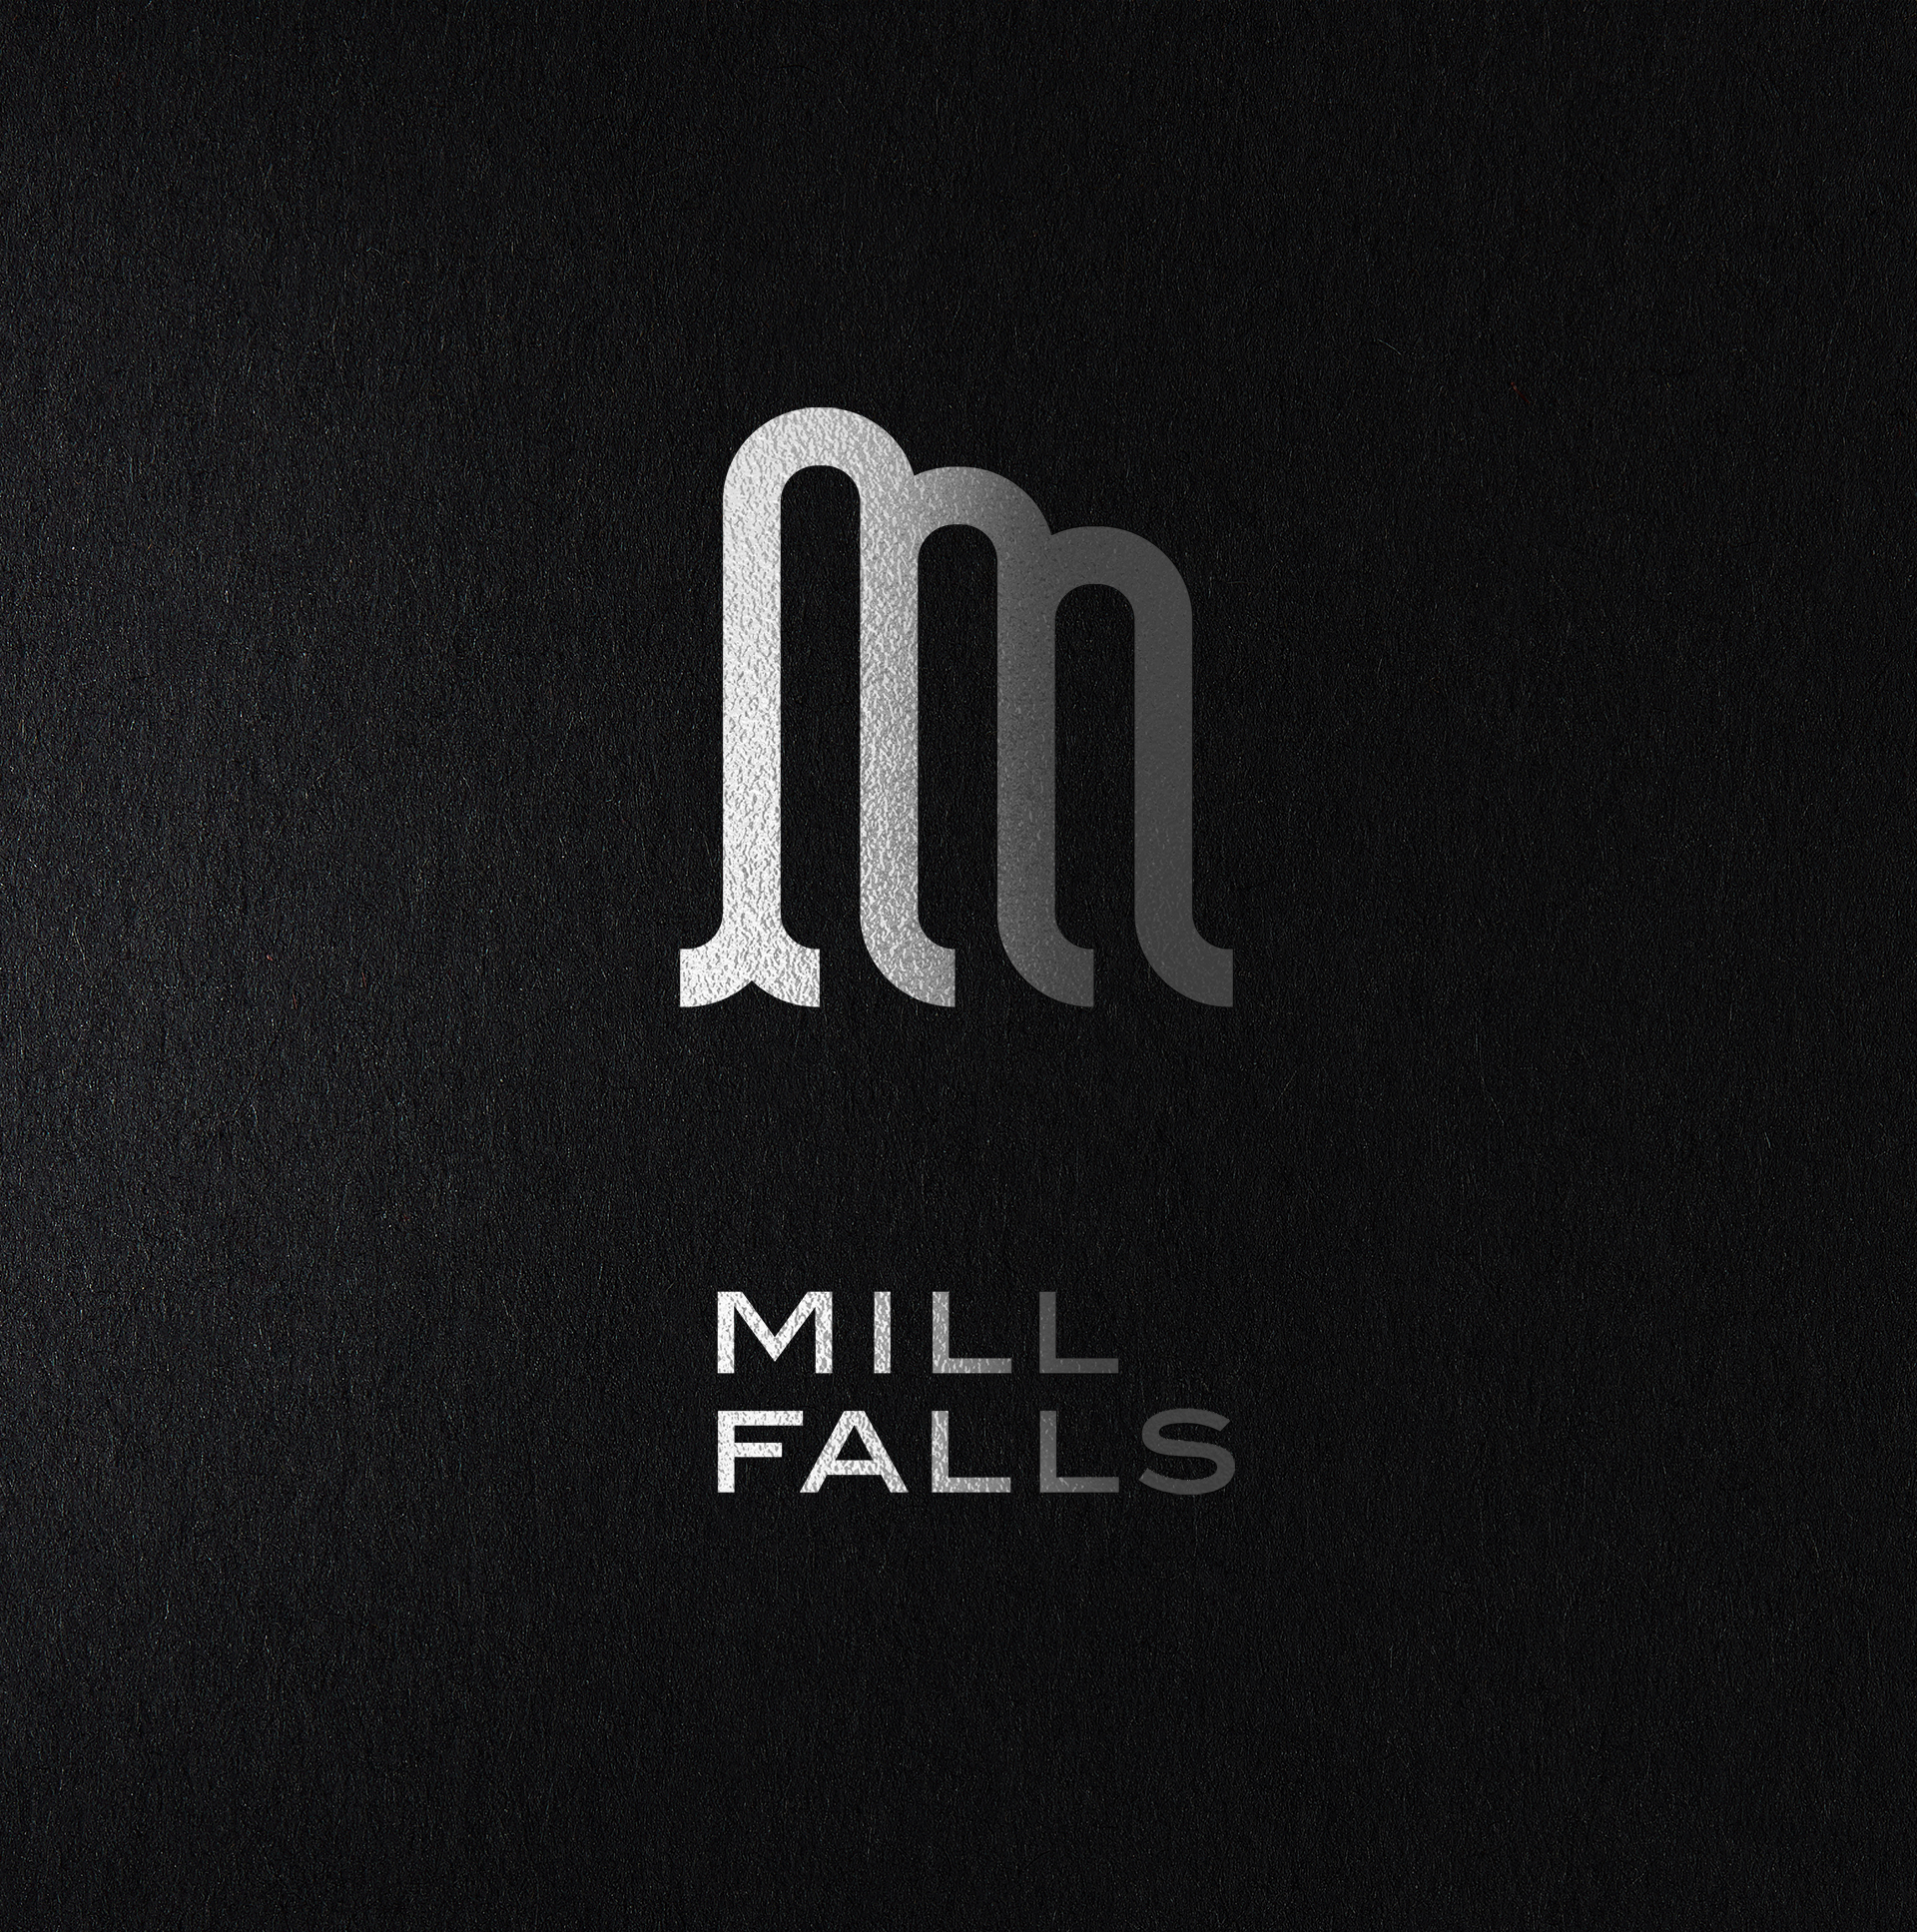 Mill Falls silver logo on black board